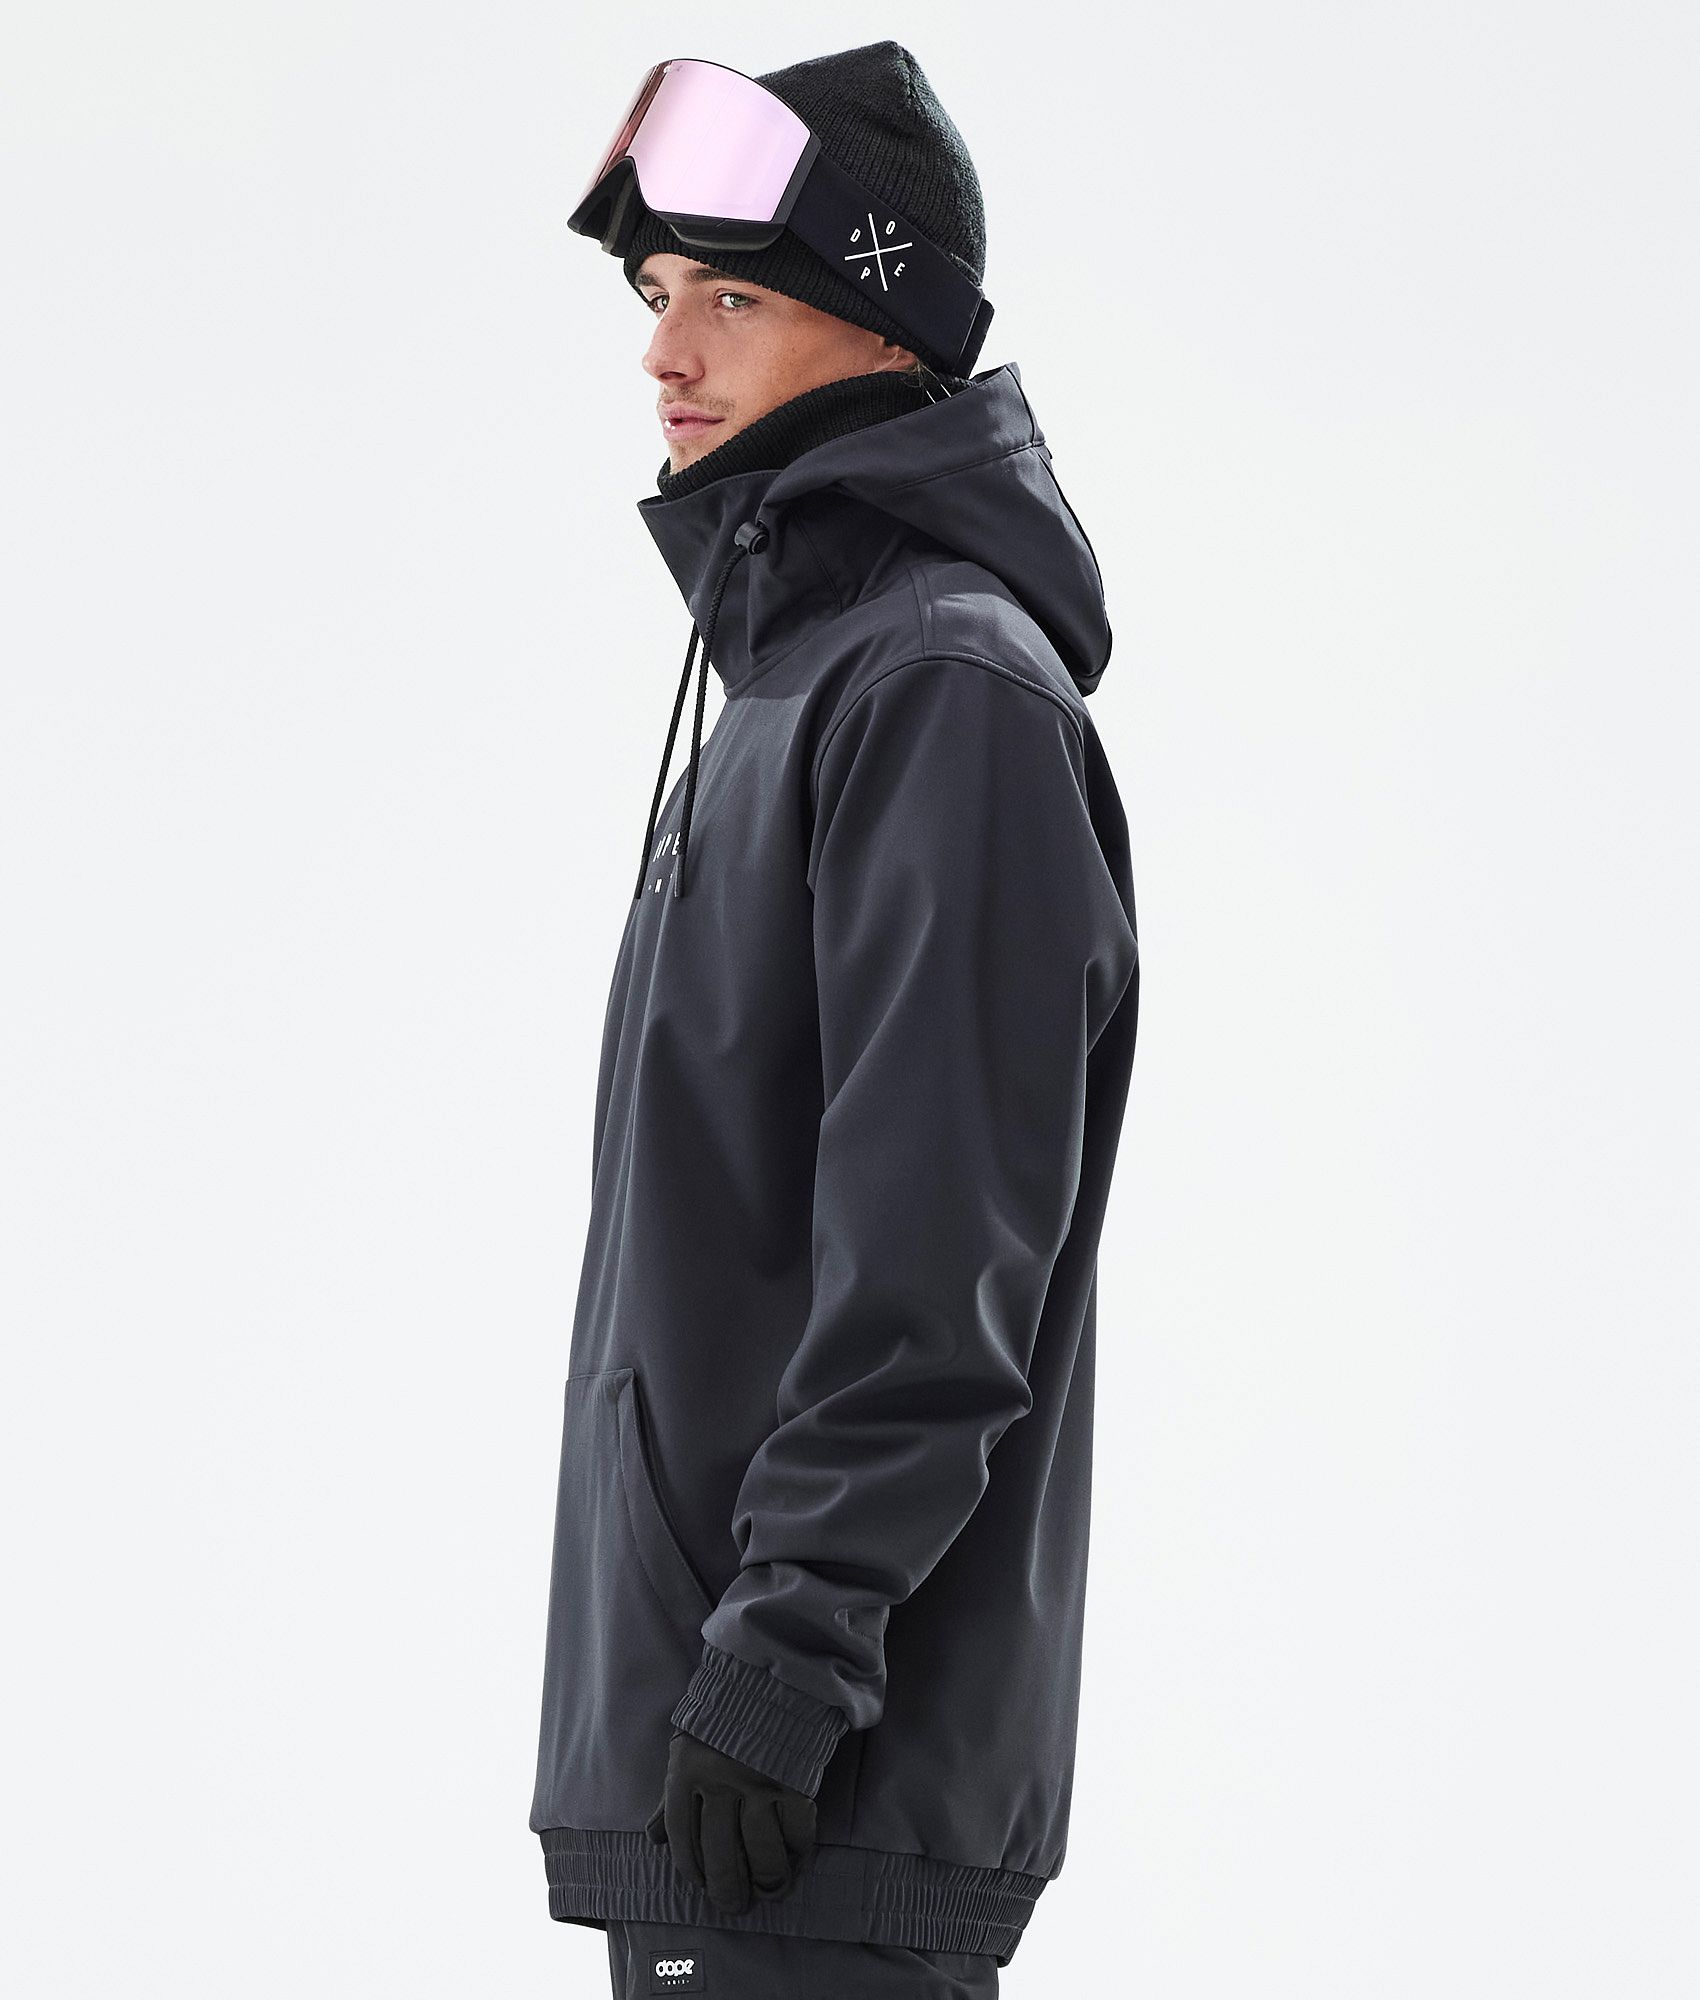 Dope Yeti 2022 Men's Snowboard Jacket Black